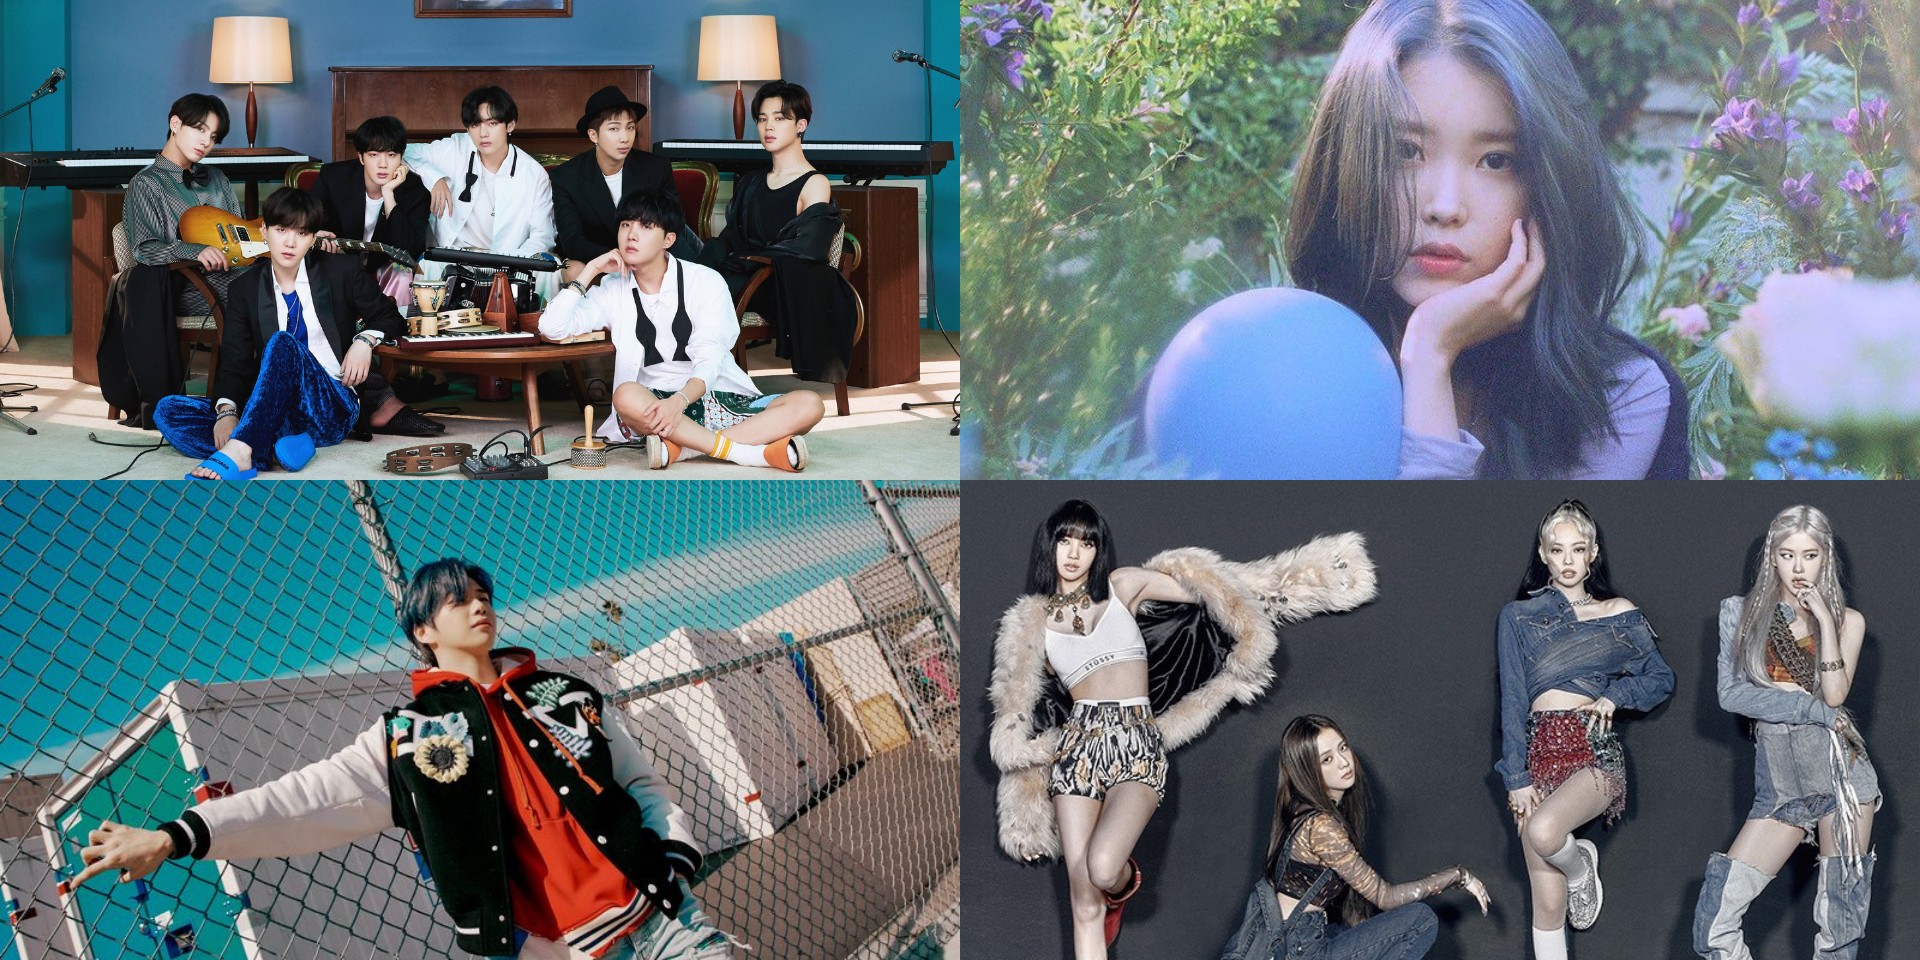 BLACKPINK, BTS, IU, Kang Daniel, and more win at the 2020 APAN Awards - see the list of Popularity Awards winners